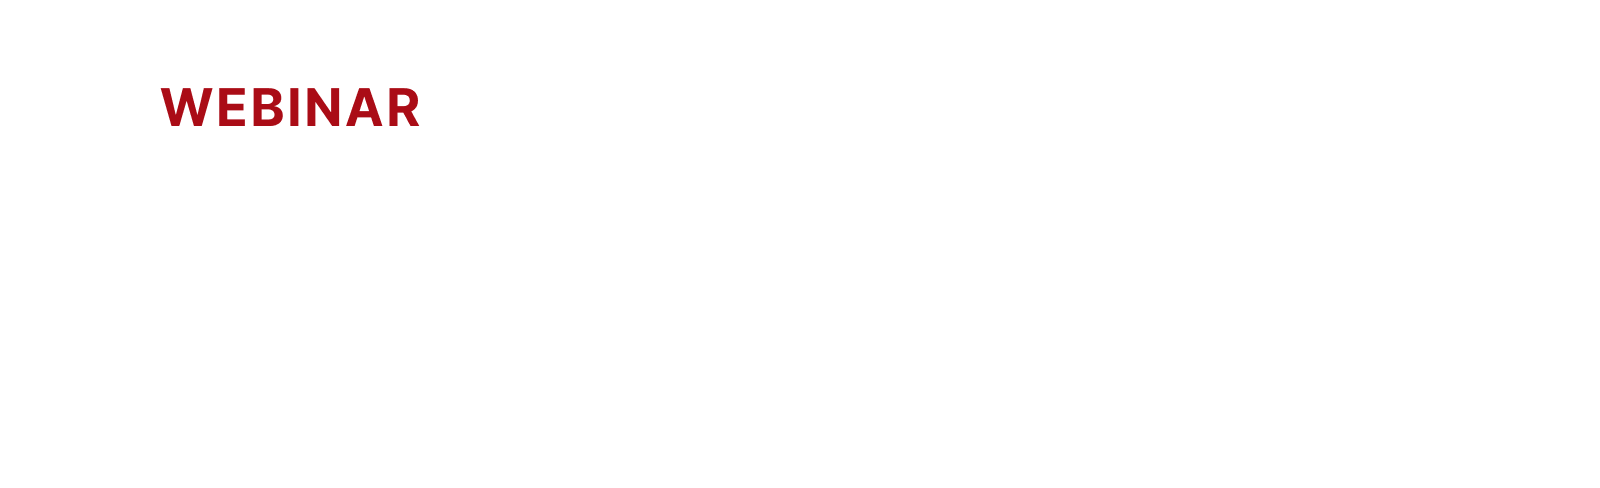 Video Recording: Create Successful Marketing Videos at Scale